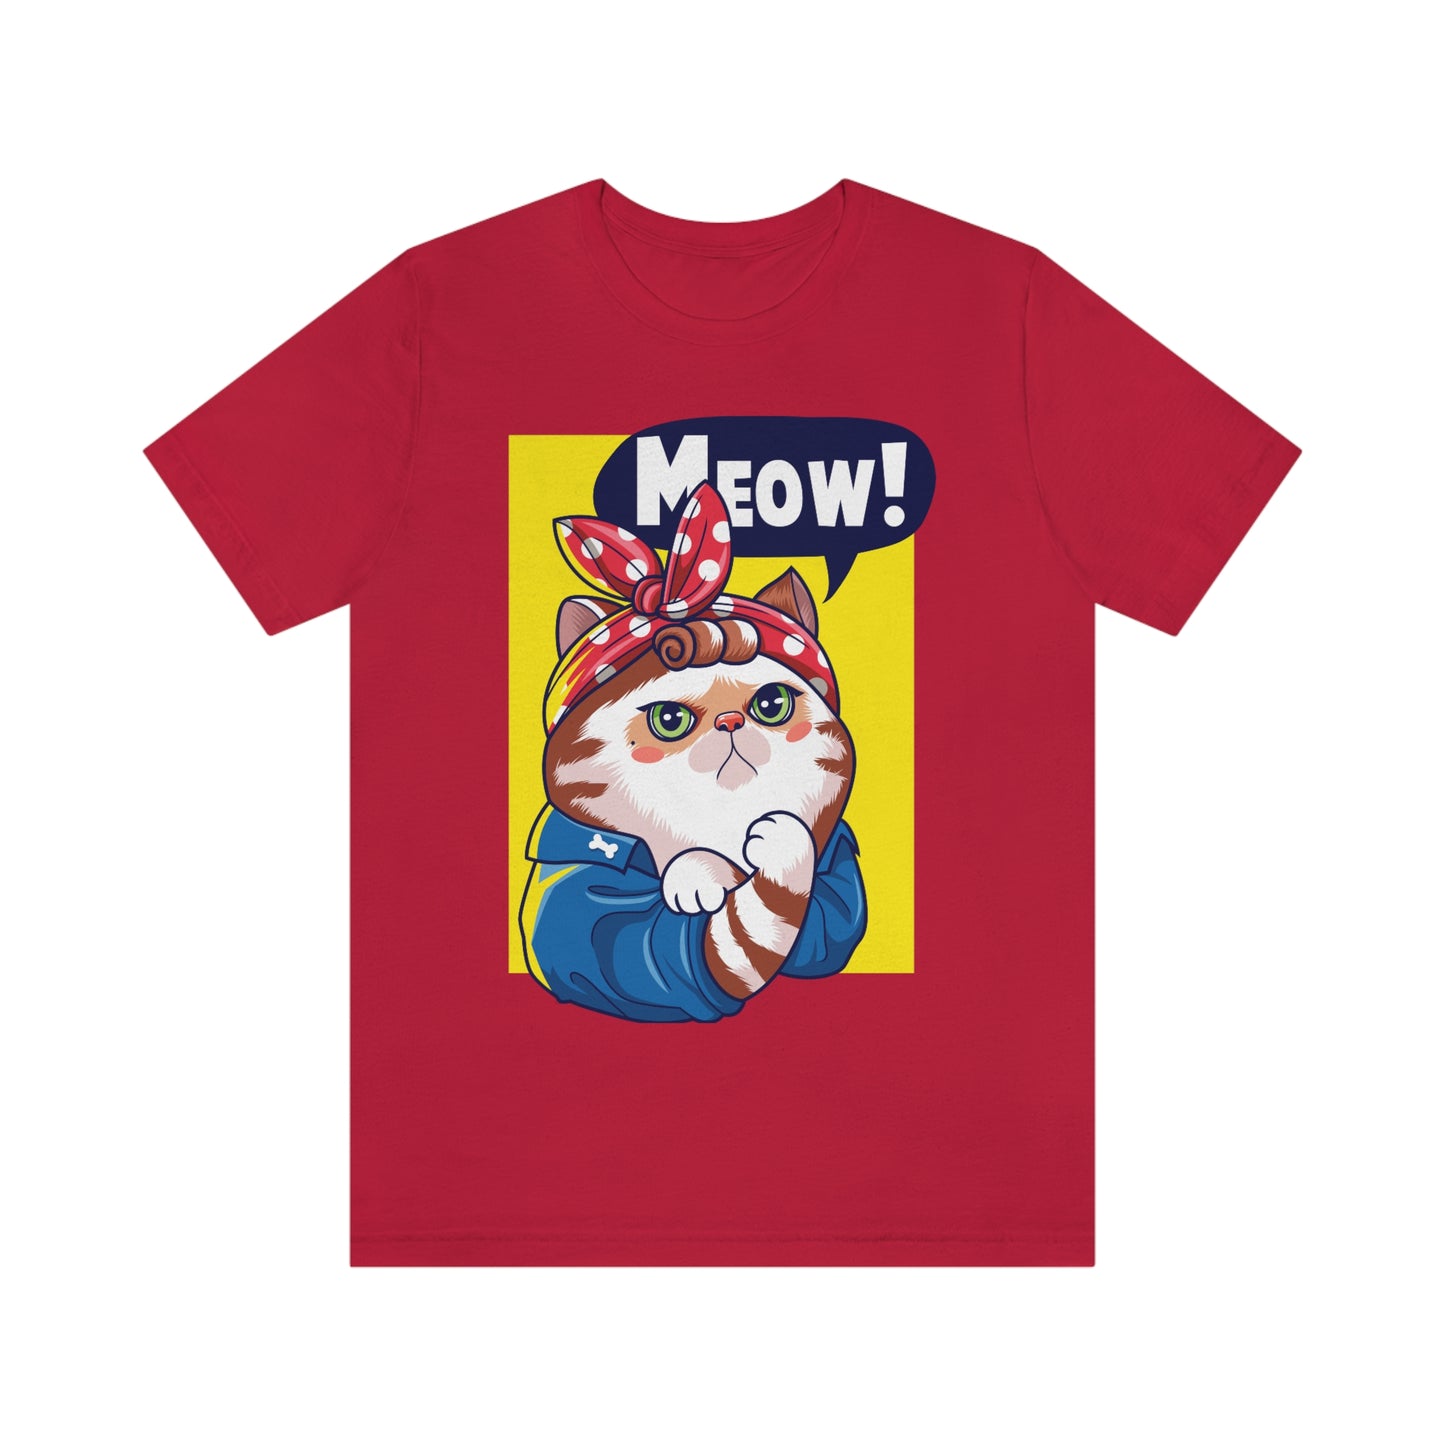 Meow! - Unisex T-Shirt